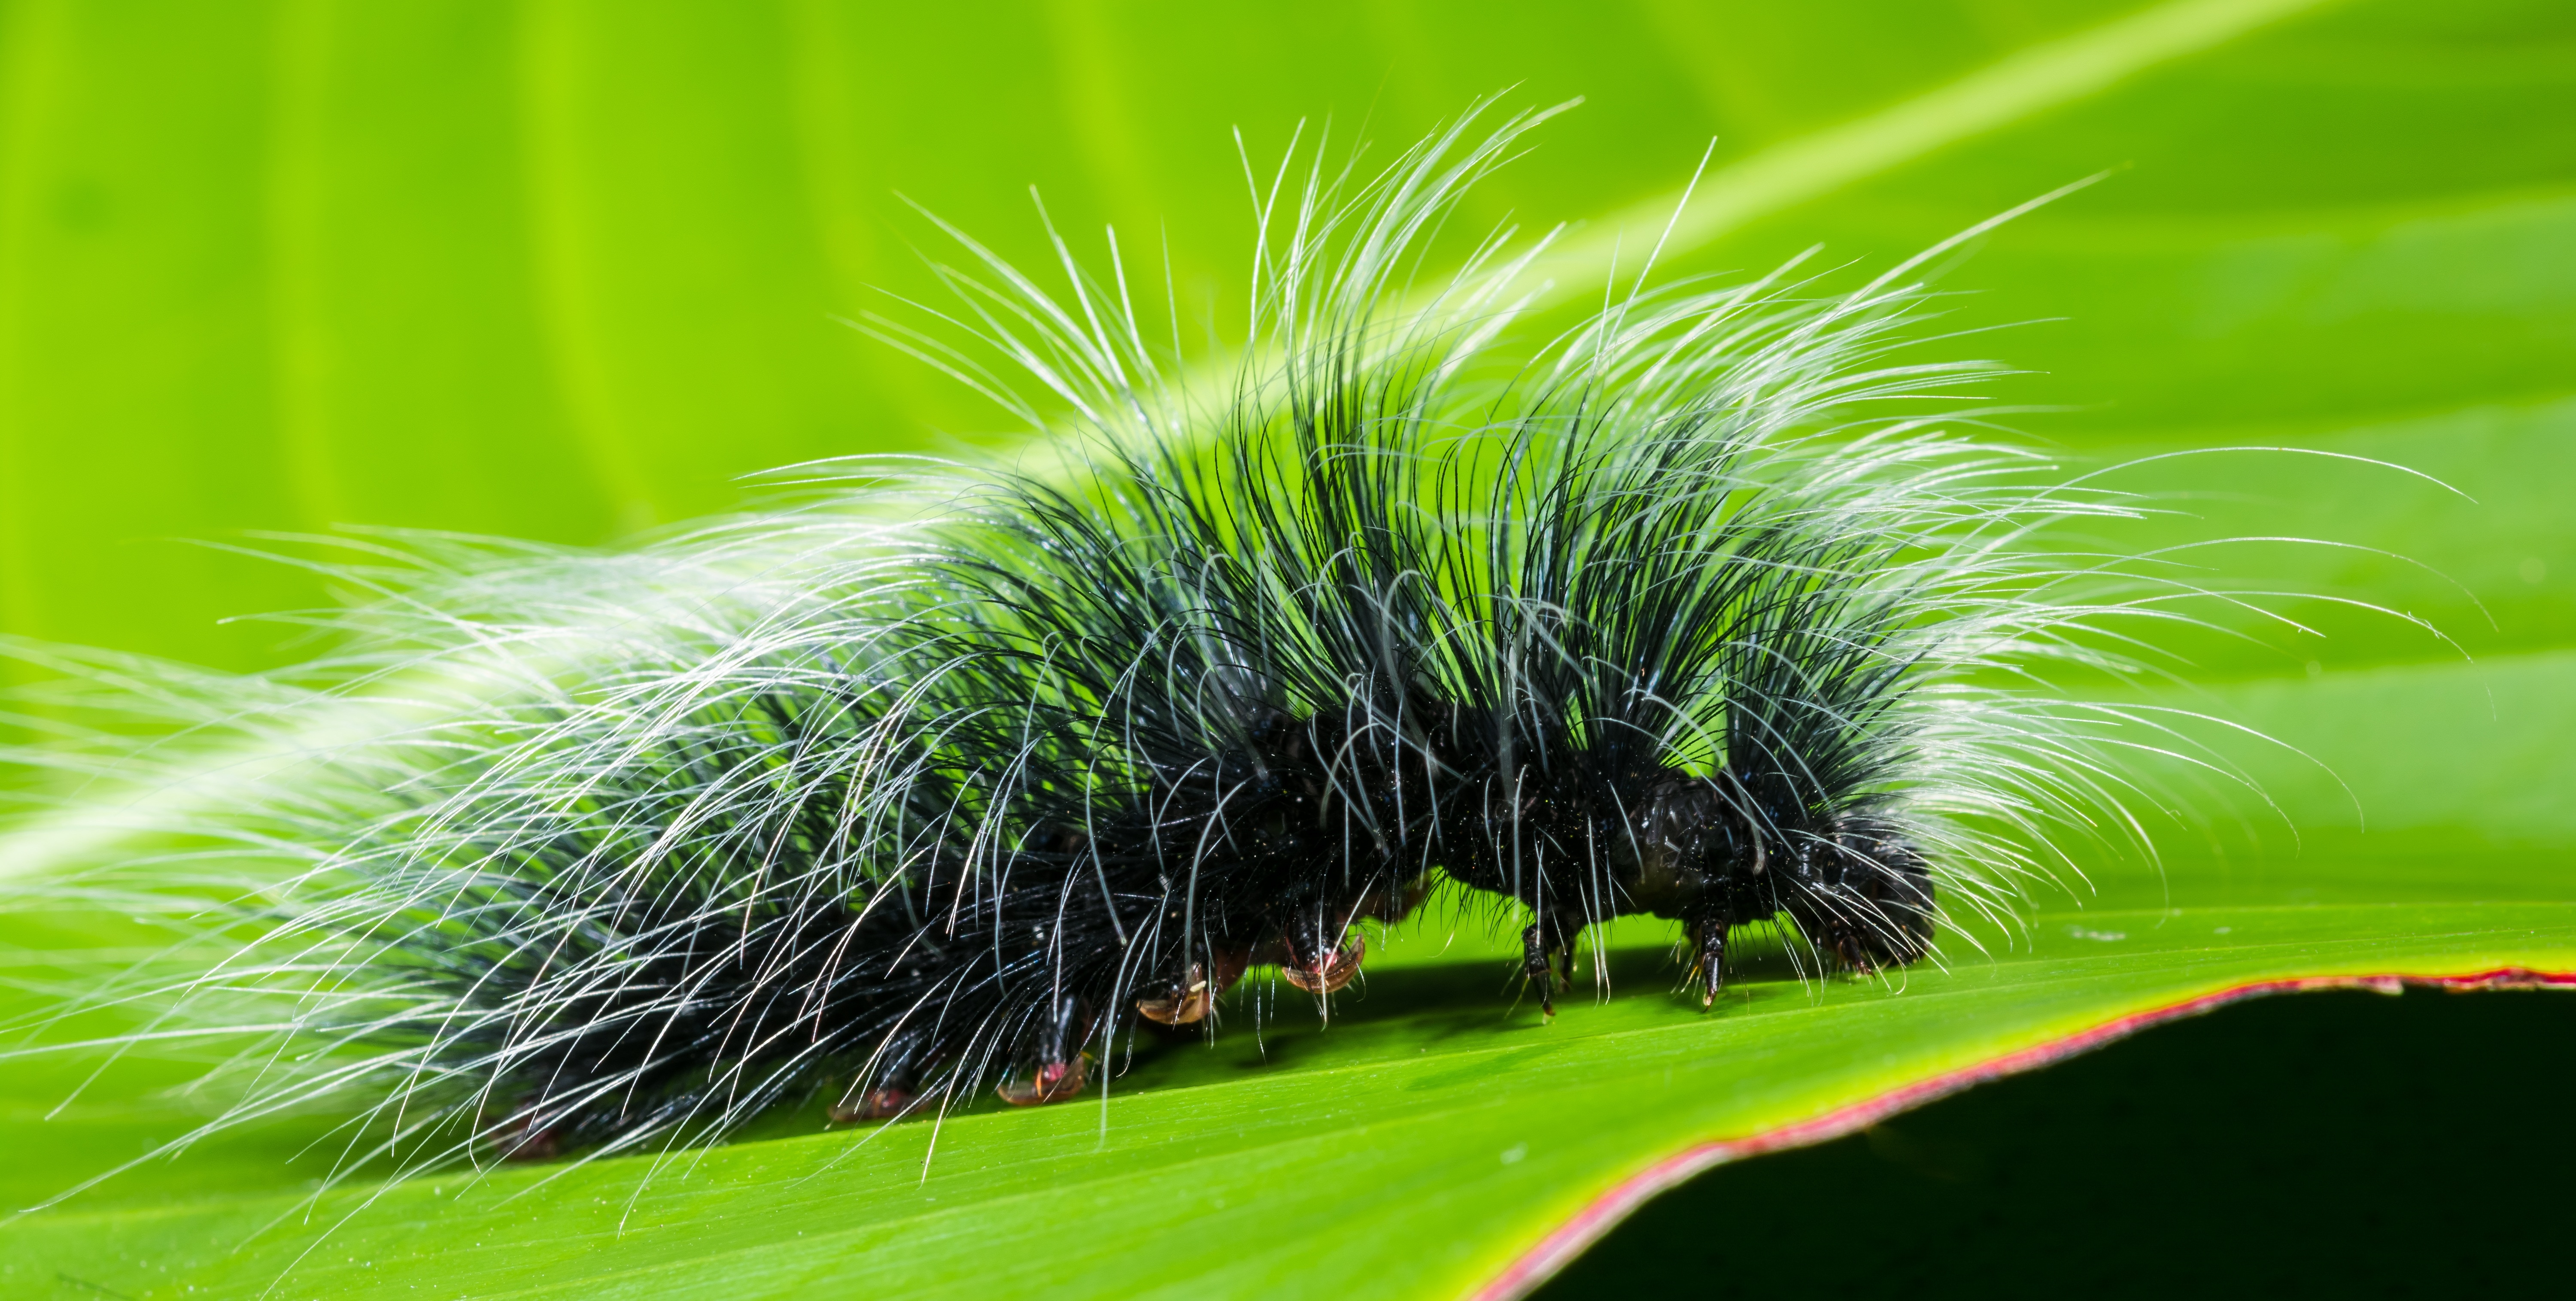 green and white caterpillar